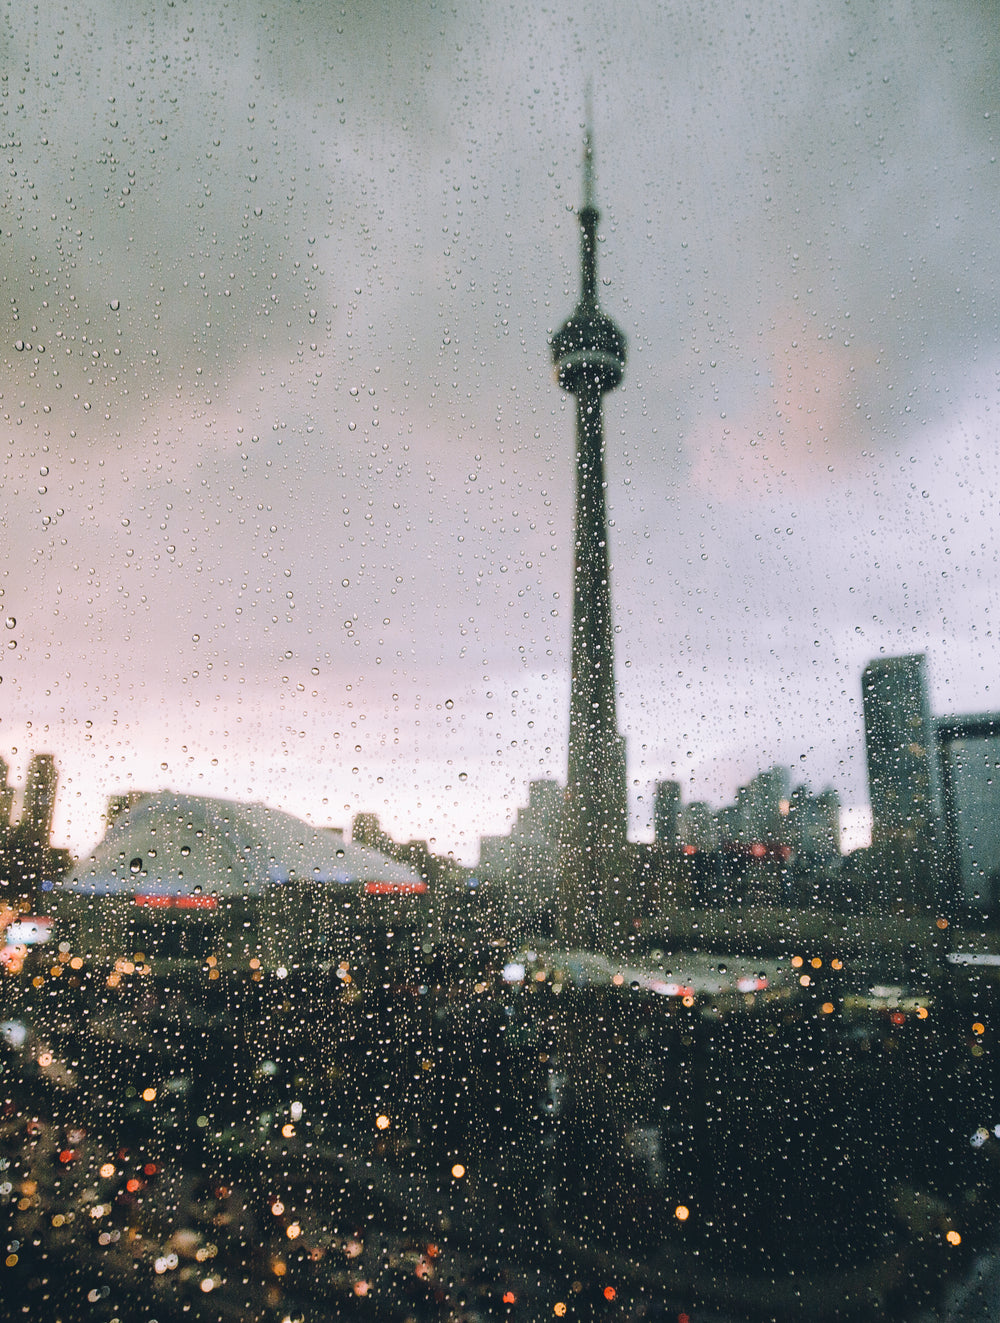 toronto seen through a rain covered window